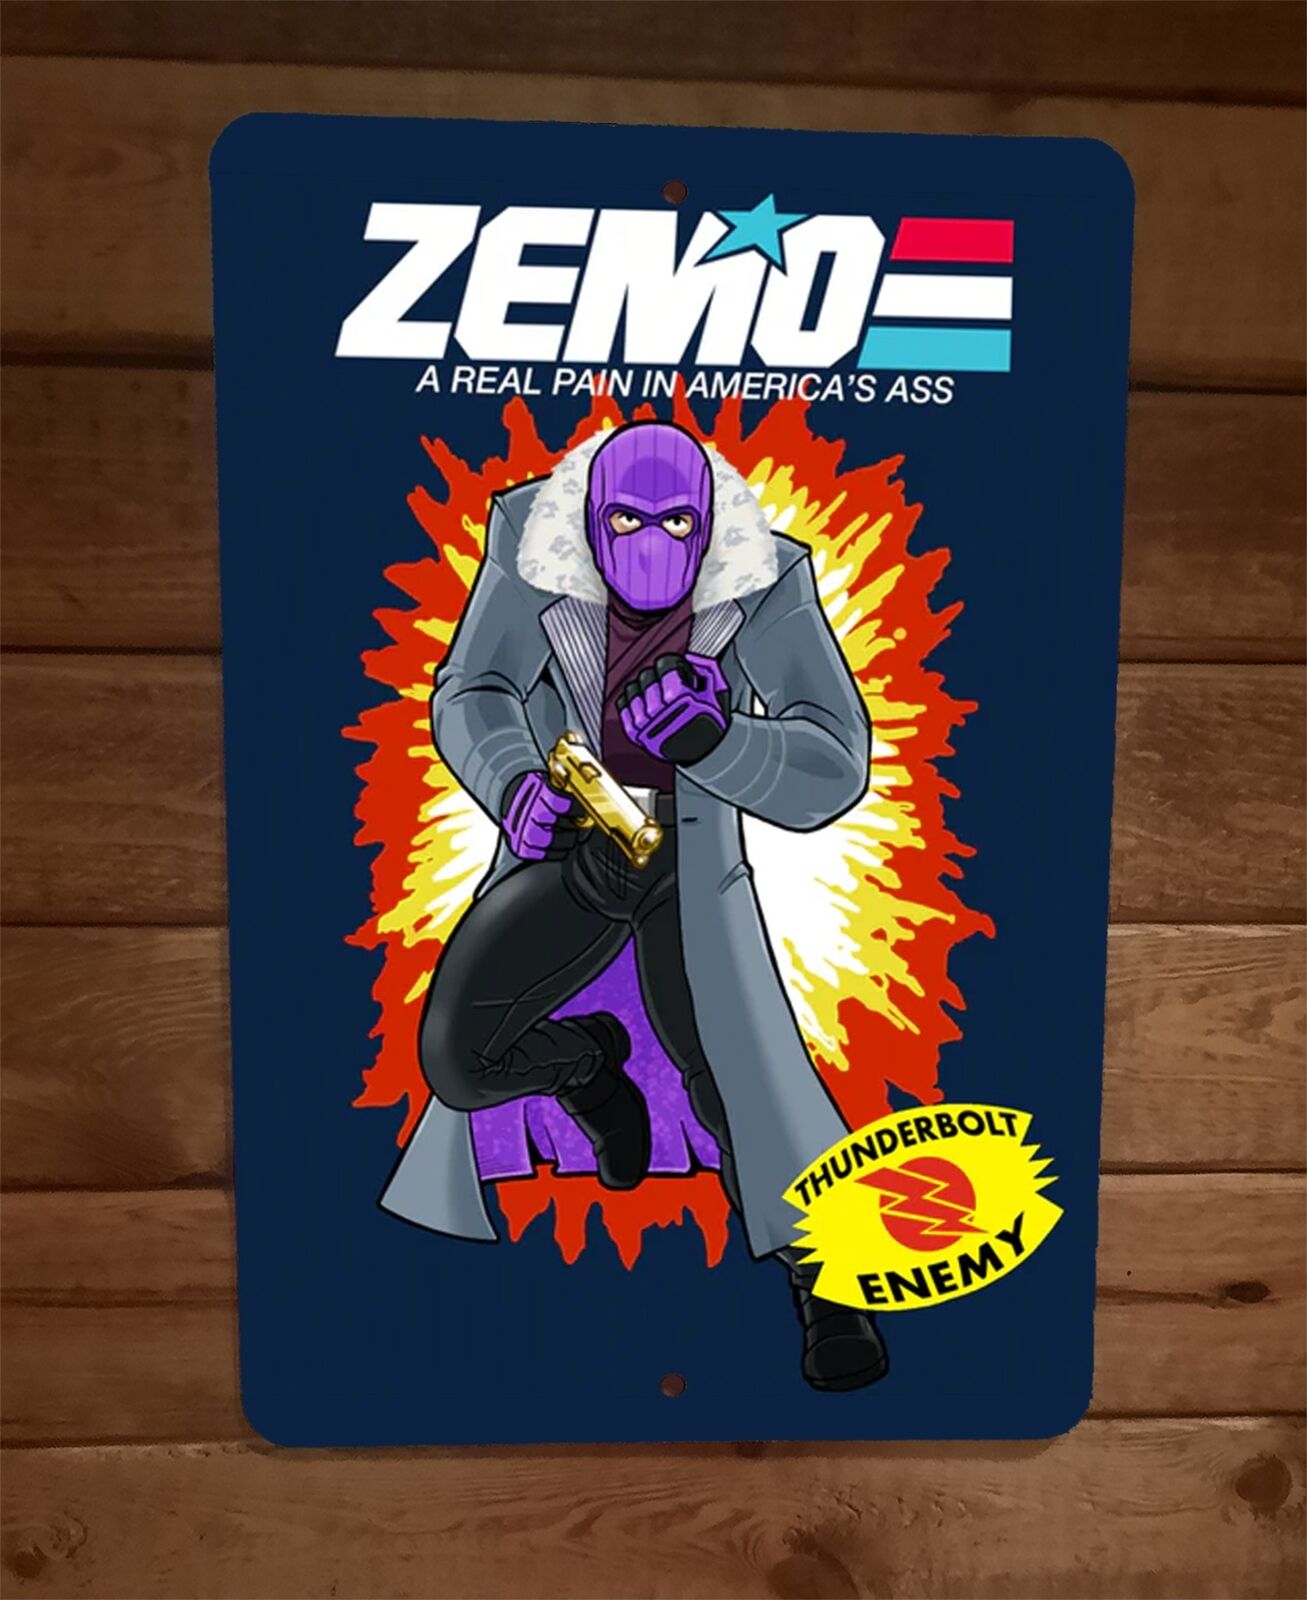 Thunderbolt Zemo a Real Pain in Americas Ass GI Joe Parody 8x12 Metal Wall Sign